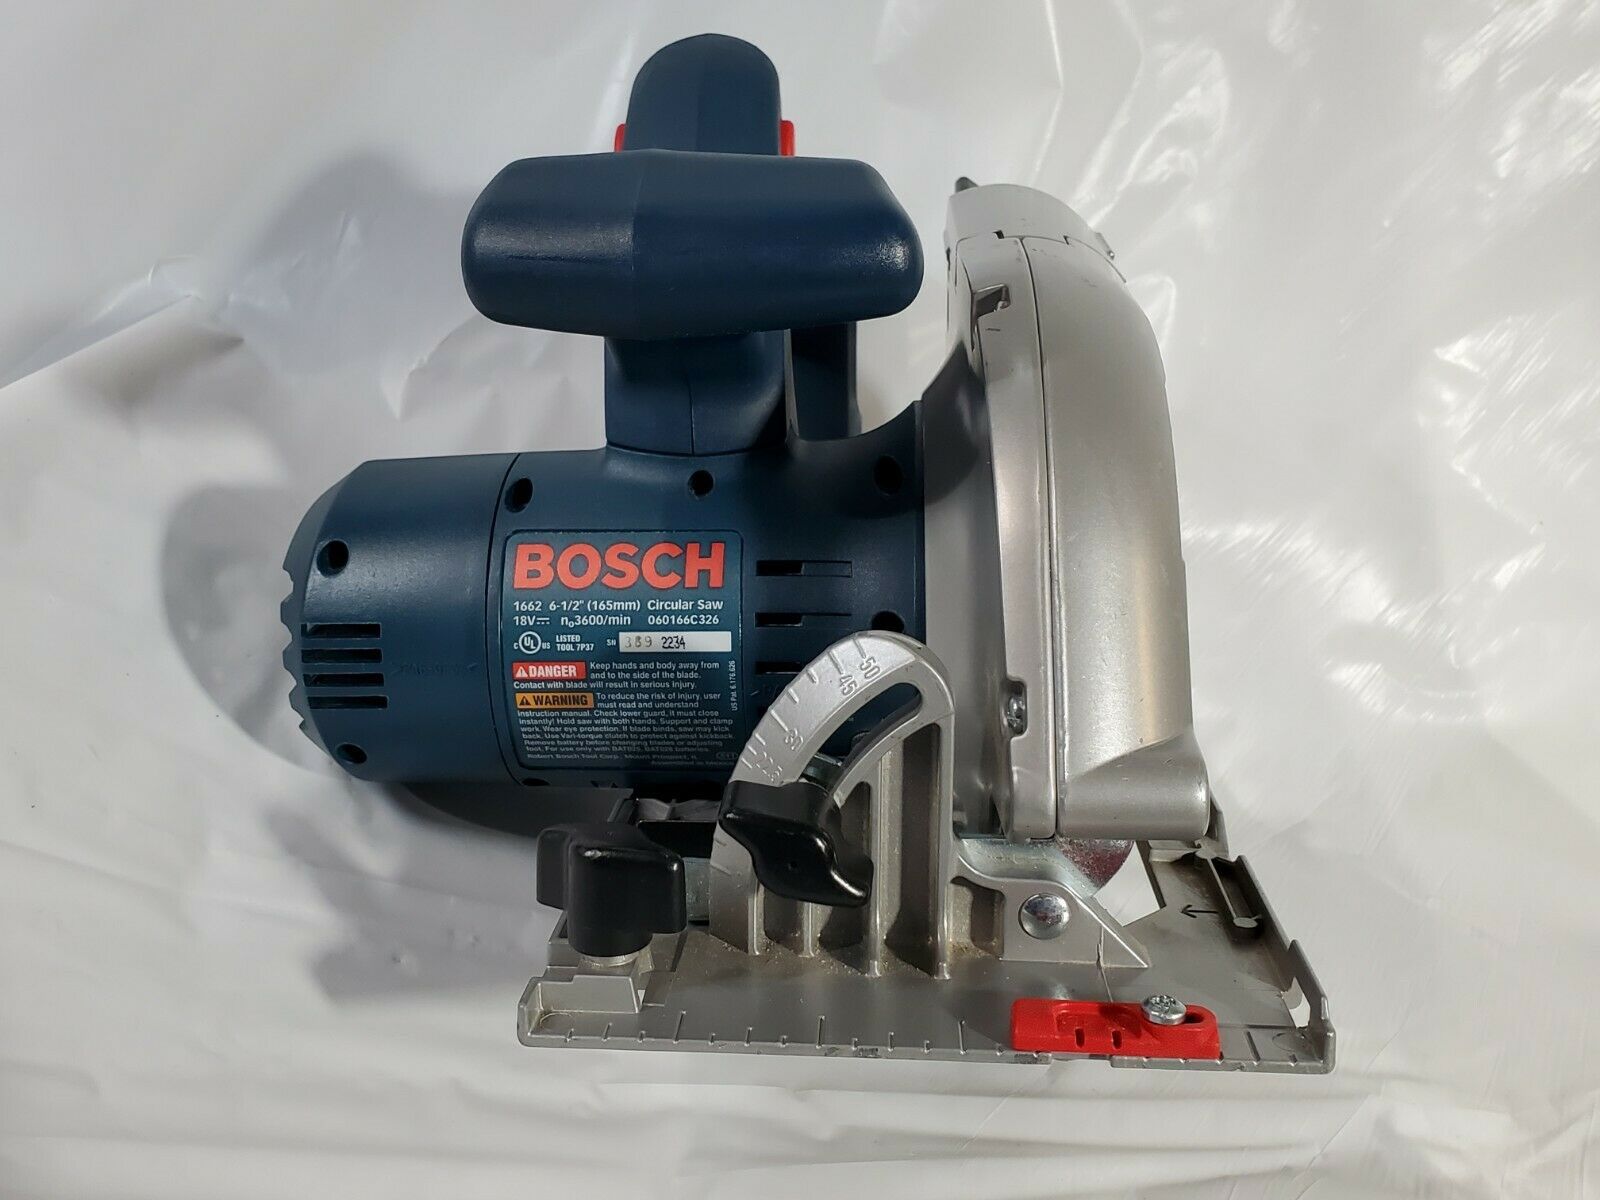 Bosch 18V Circular Saw 6 1/2" NiCad Model # 1662 EXCELLENT CONDITION- Bare Tool